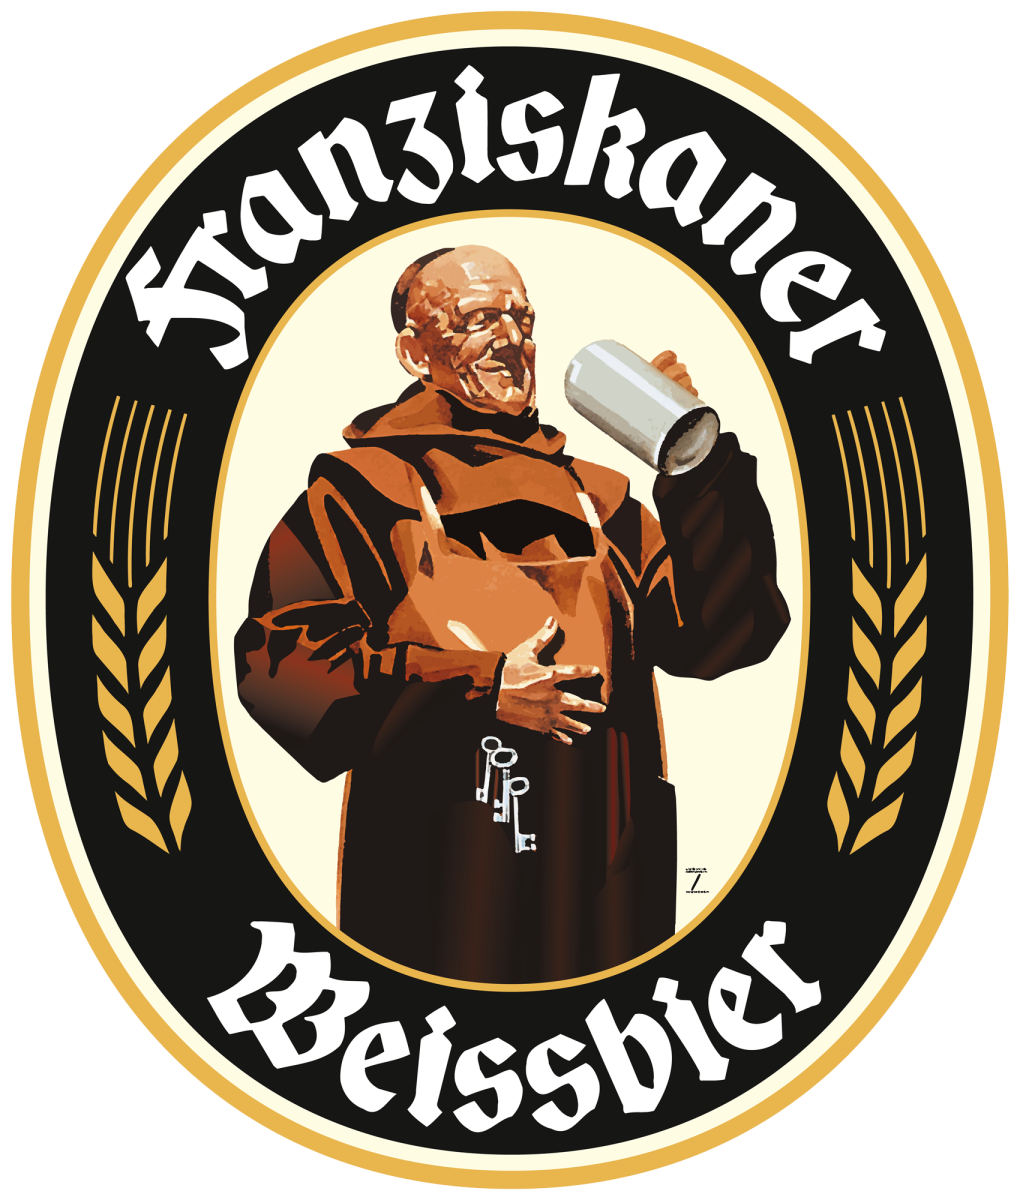 Franziskaner_Weissbier_logo